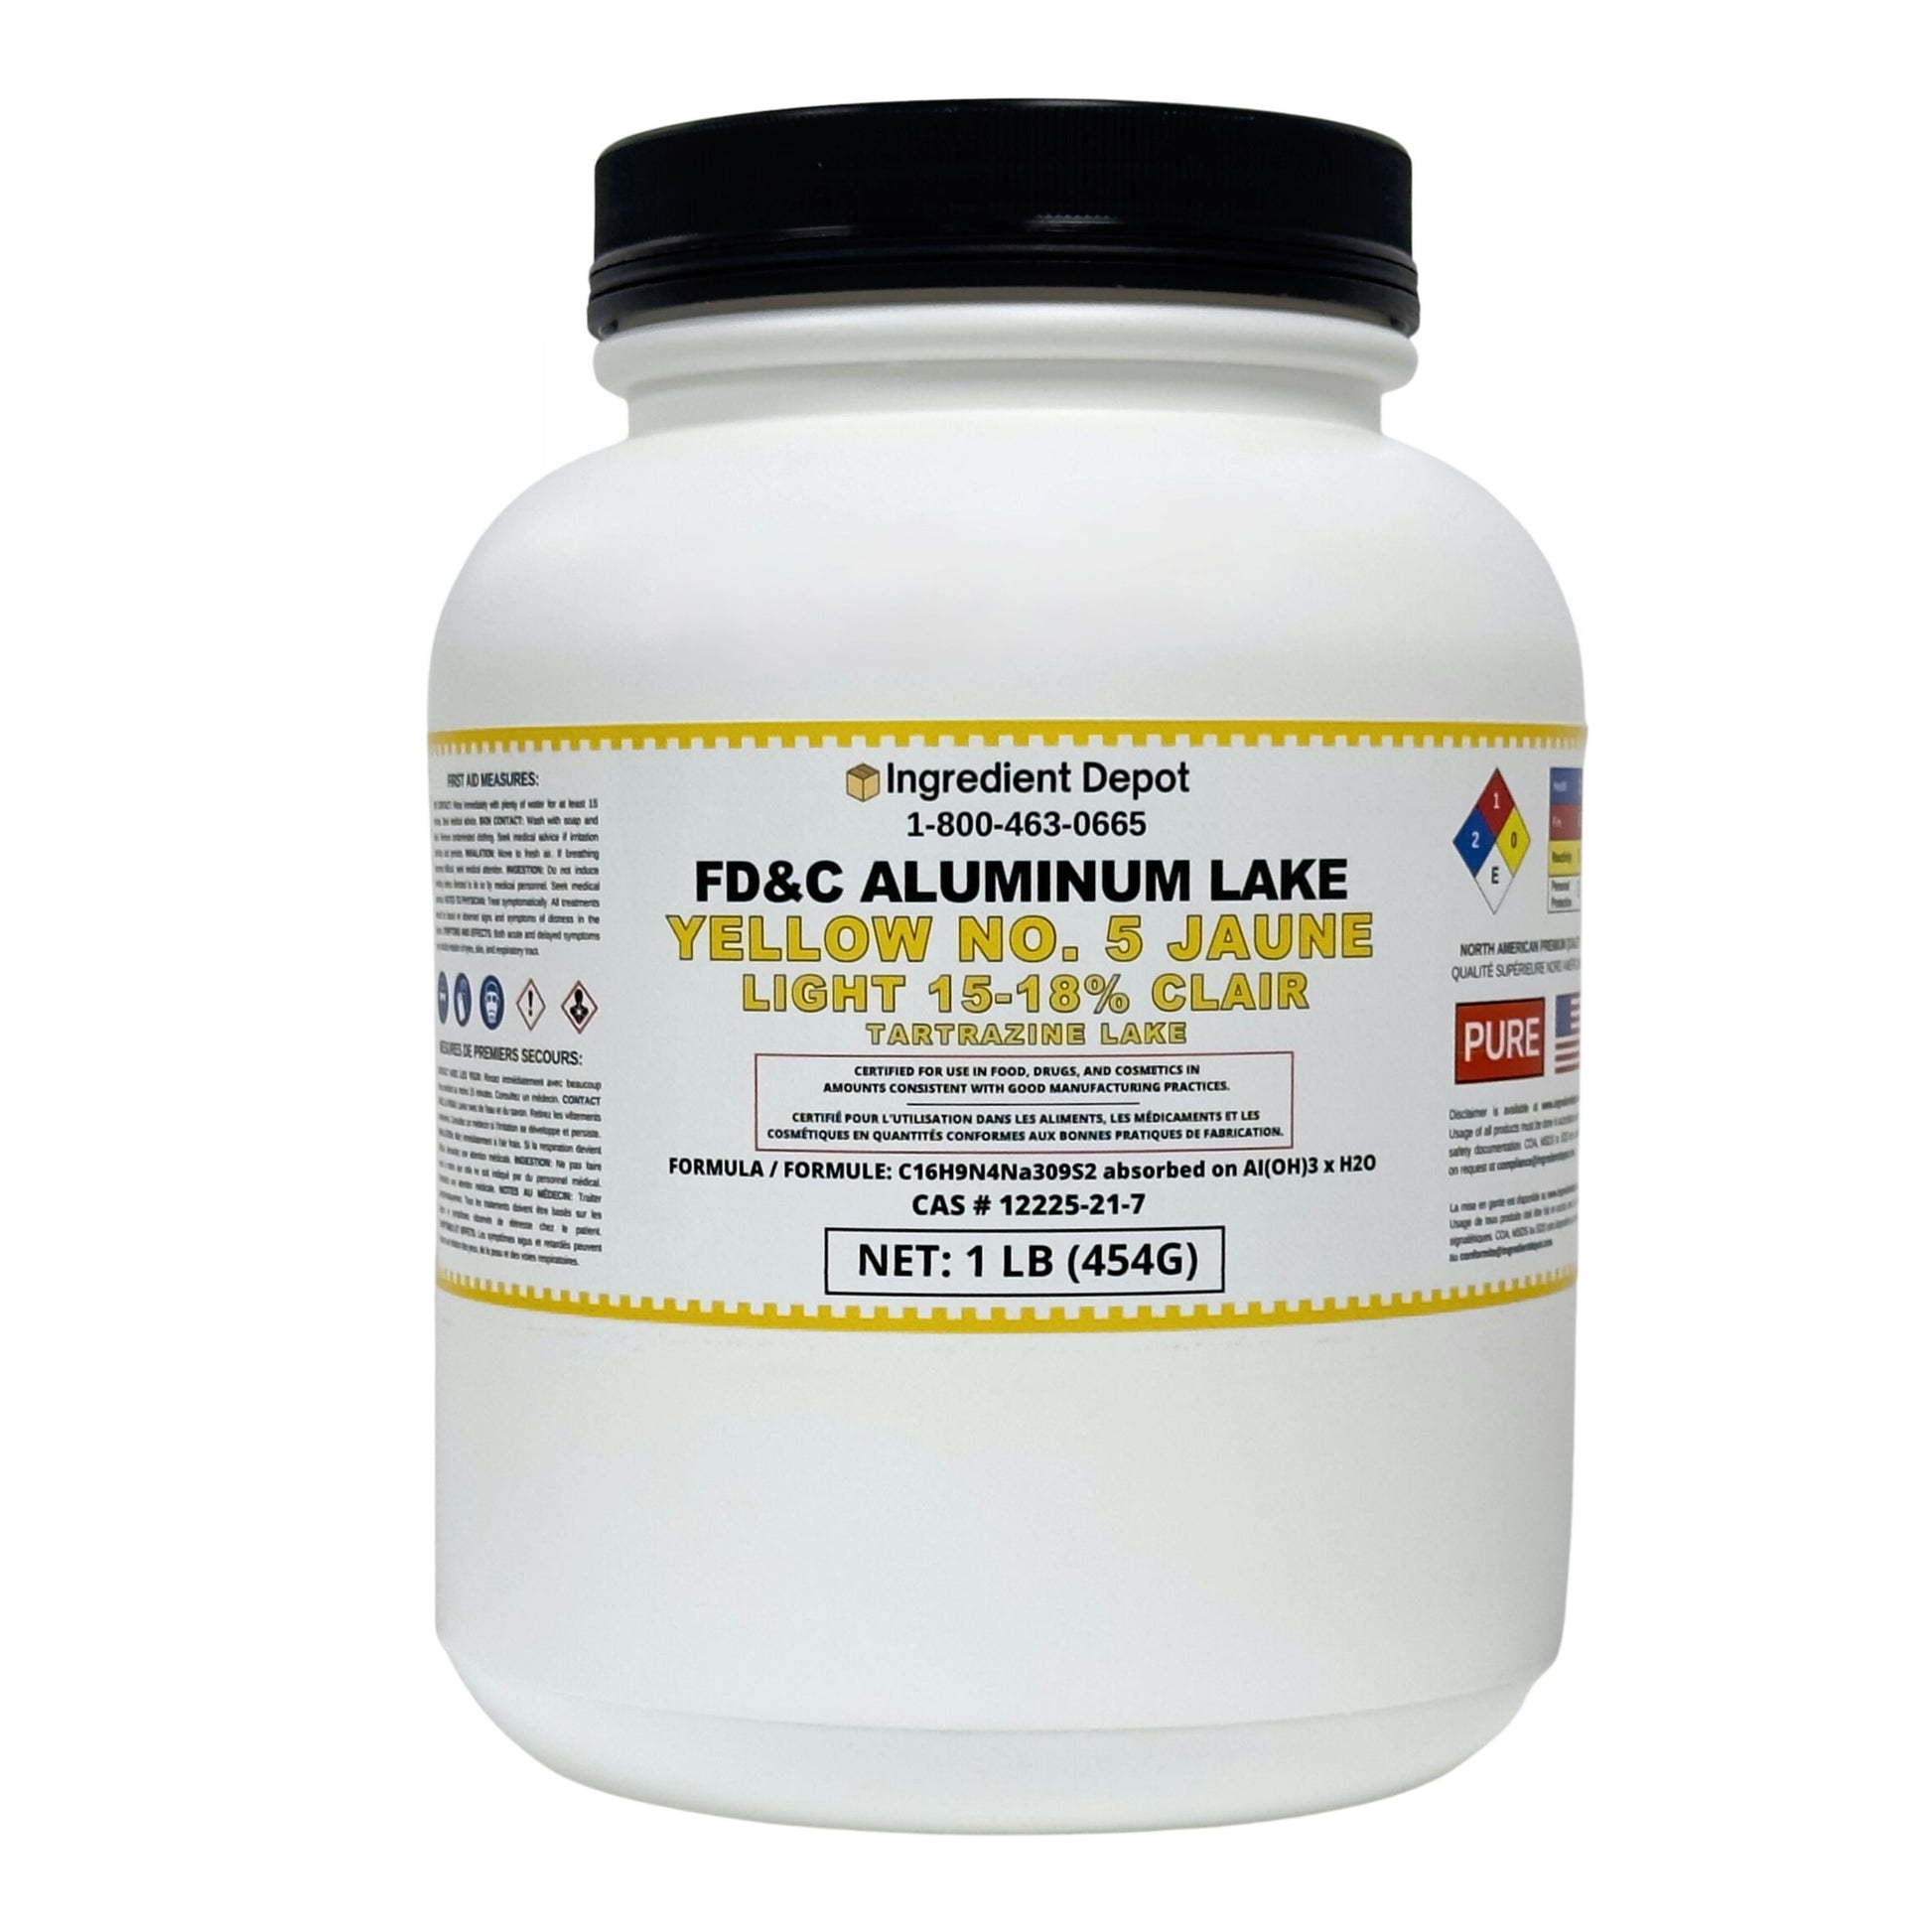 Yellow No. 5 FD&C Aluminum Lake Light (15-18%) Tartrazine 1 lb (454g) - IngredientDepot.com